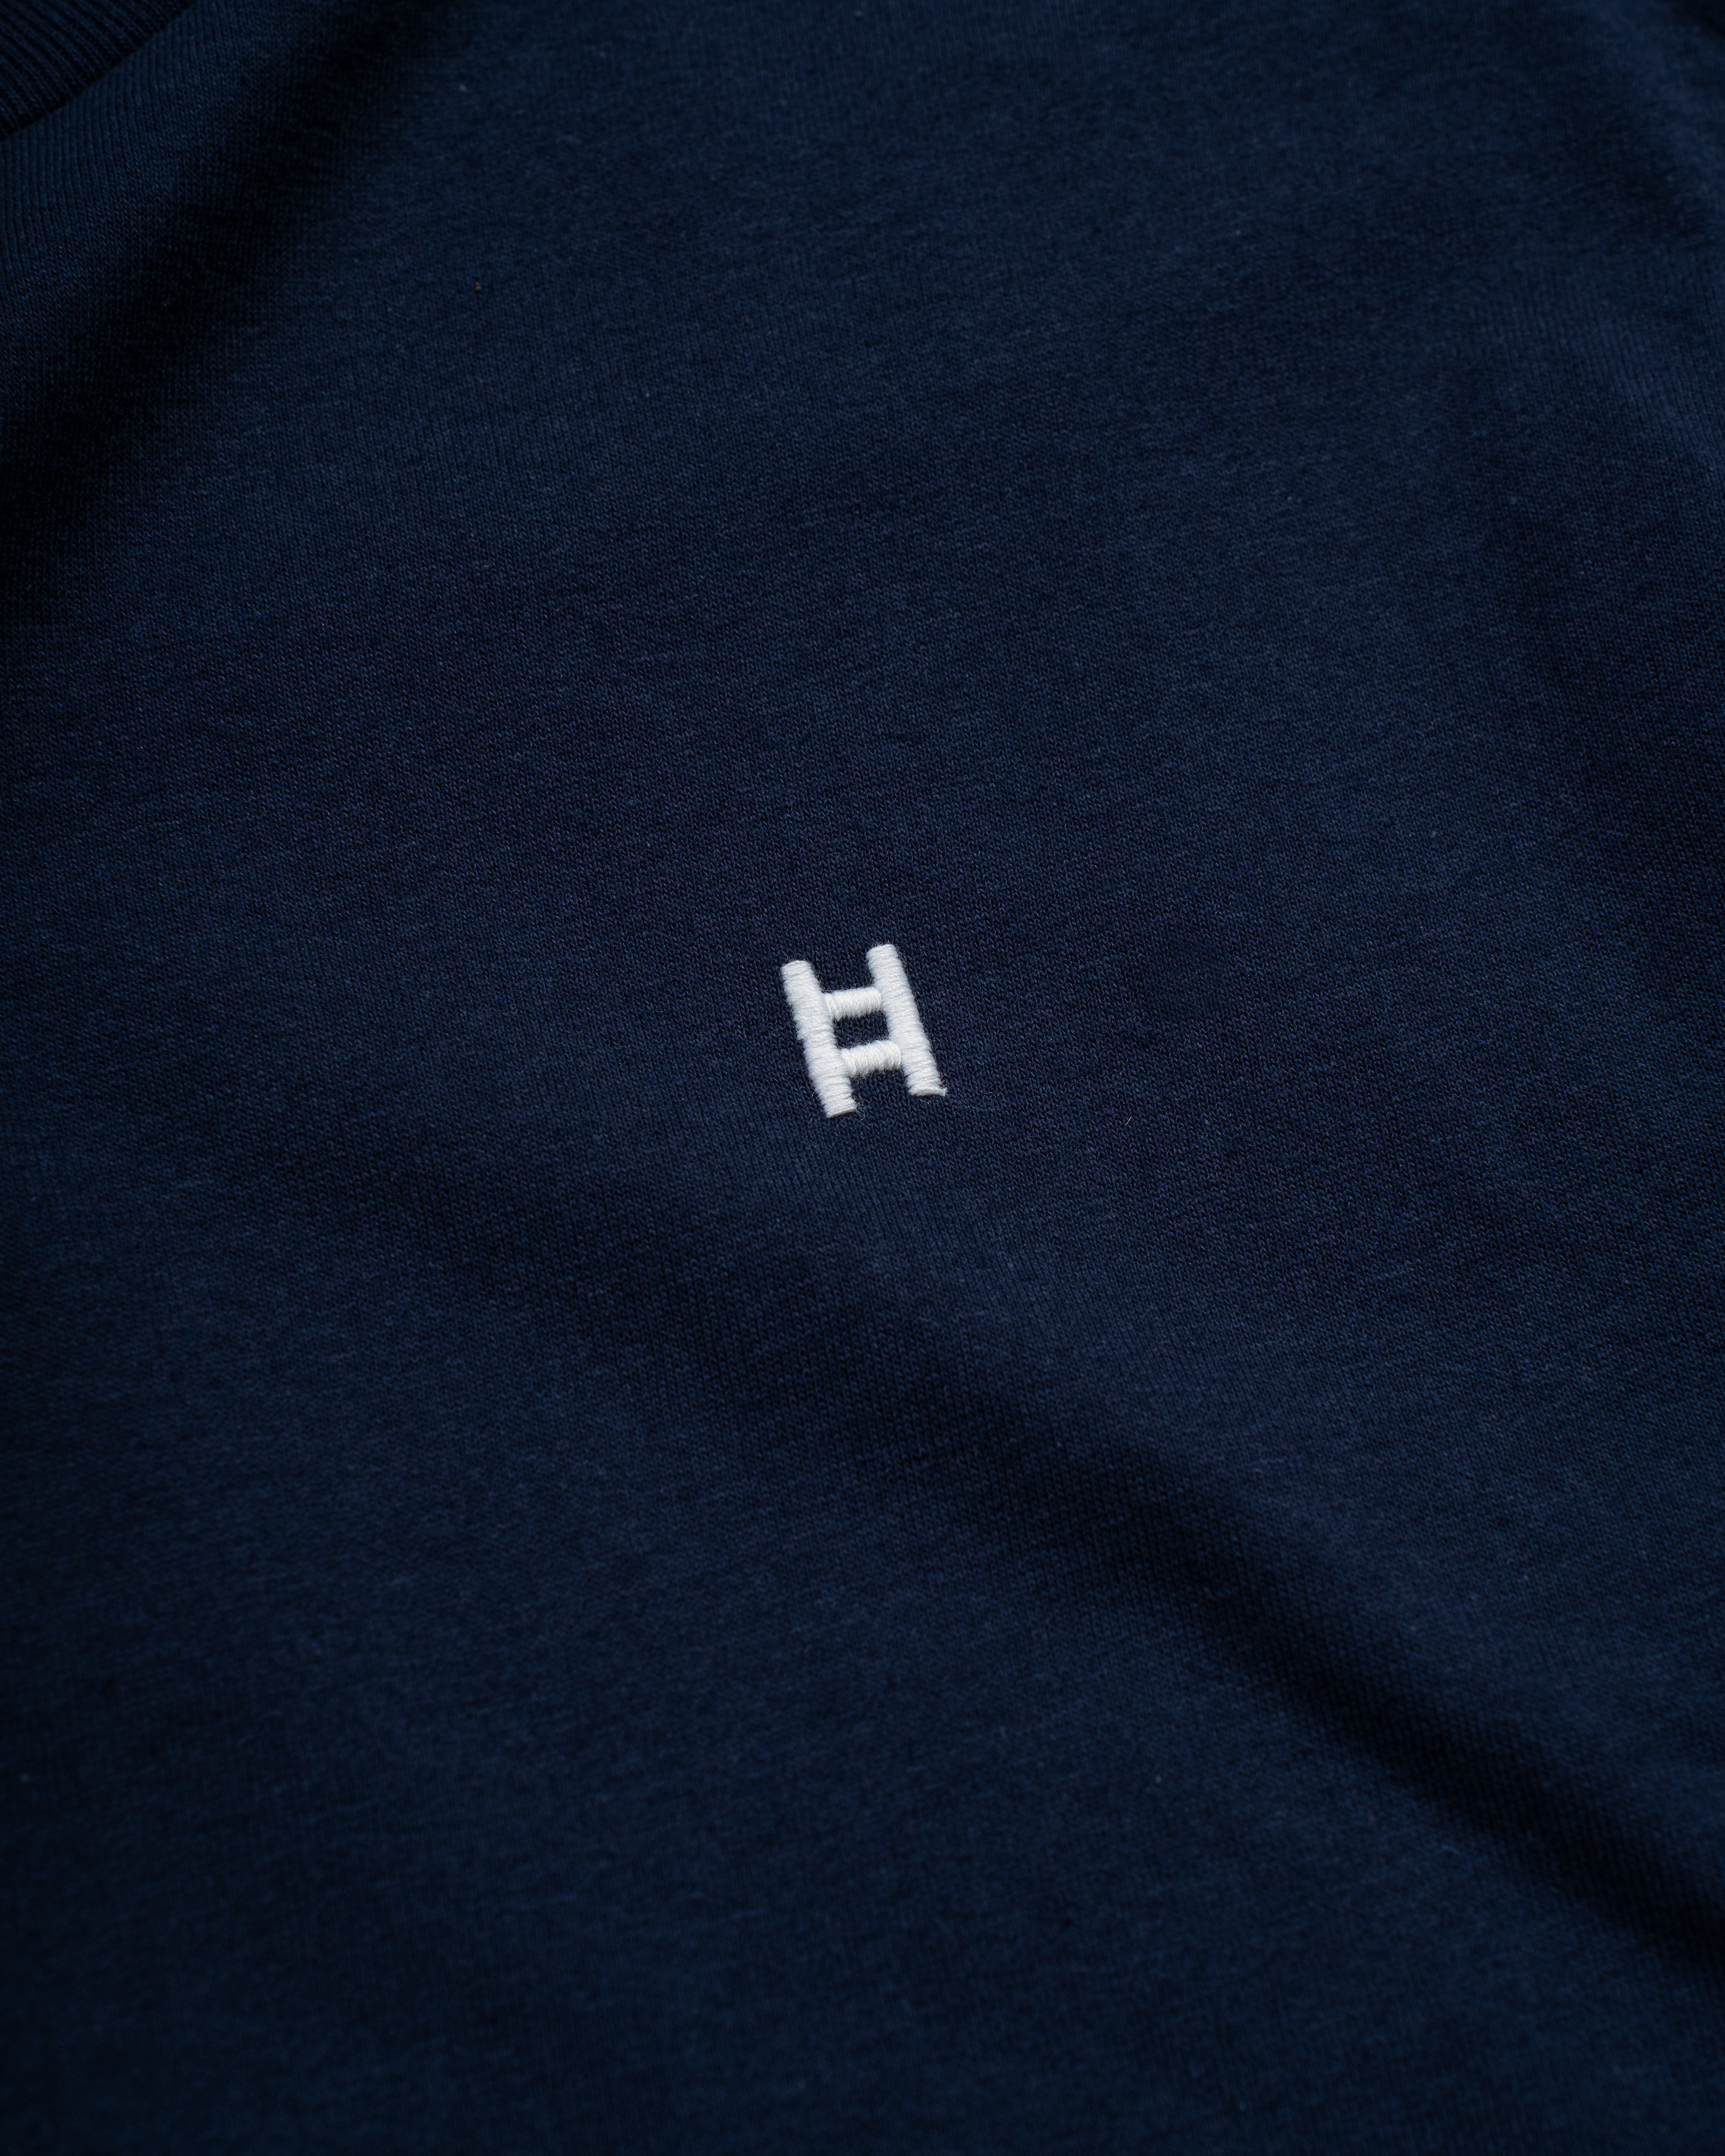 Camiseta H bordada